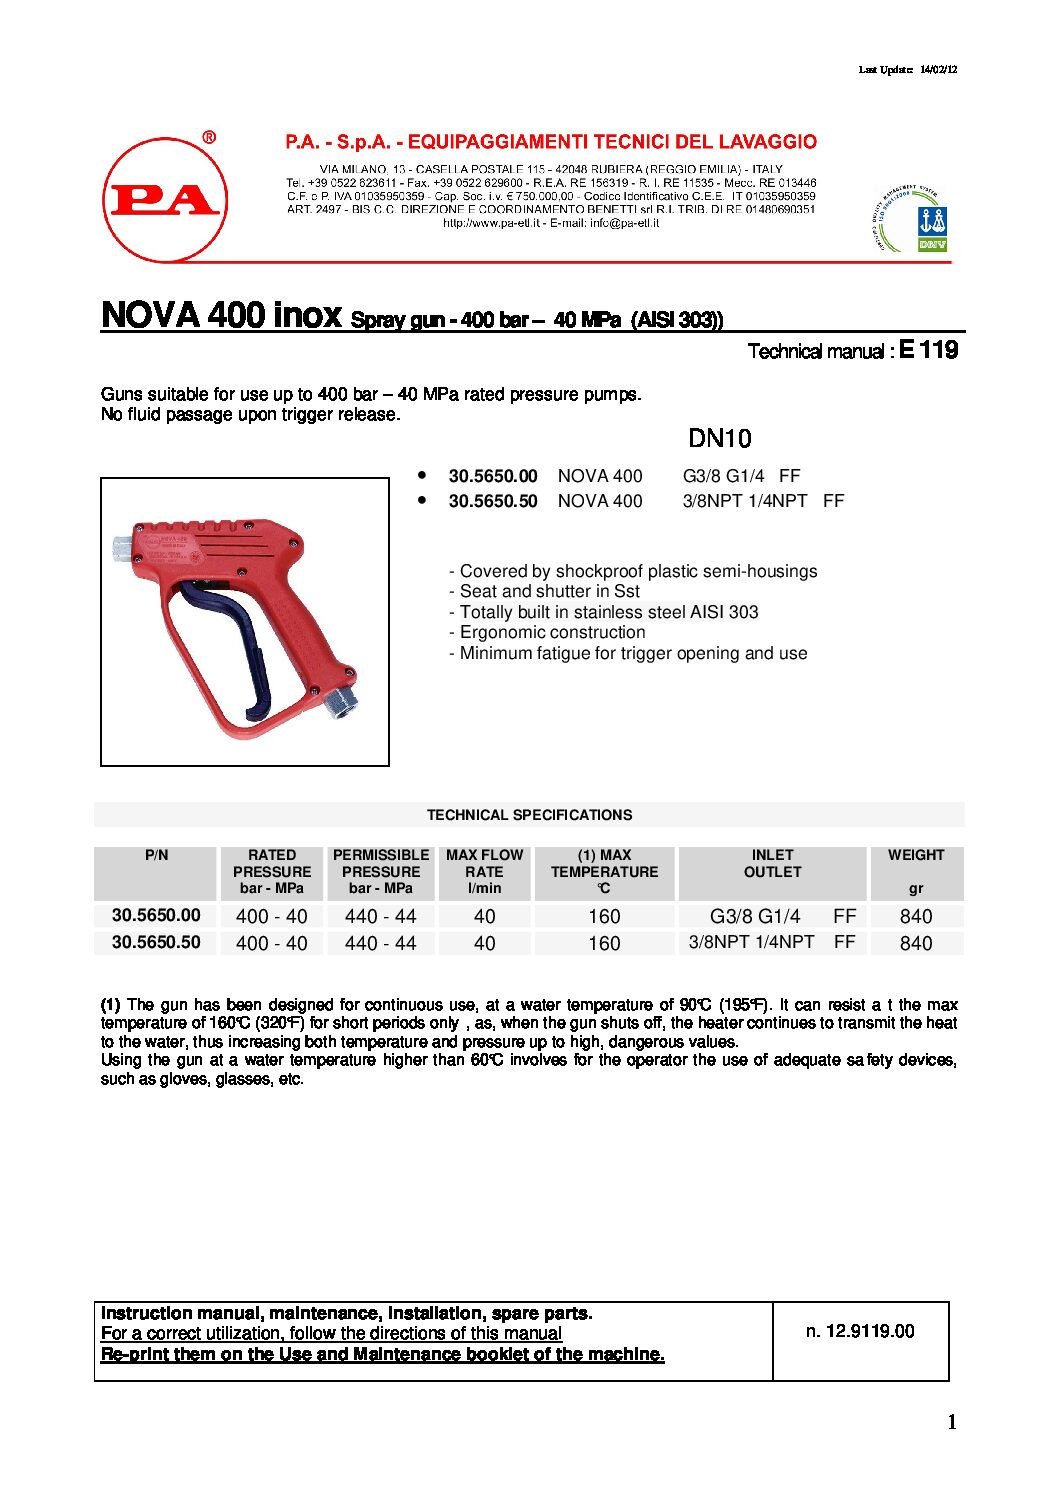 PA Nova 400 Compensating Gun technical information